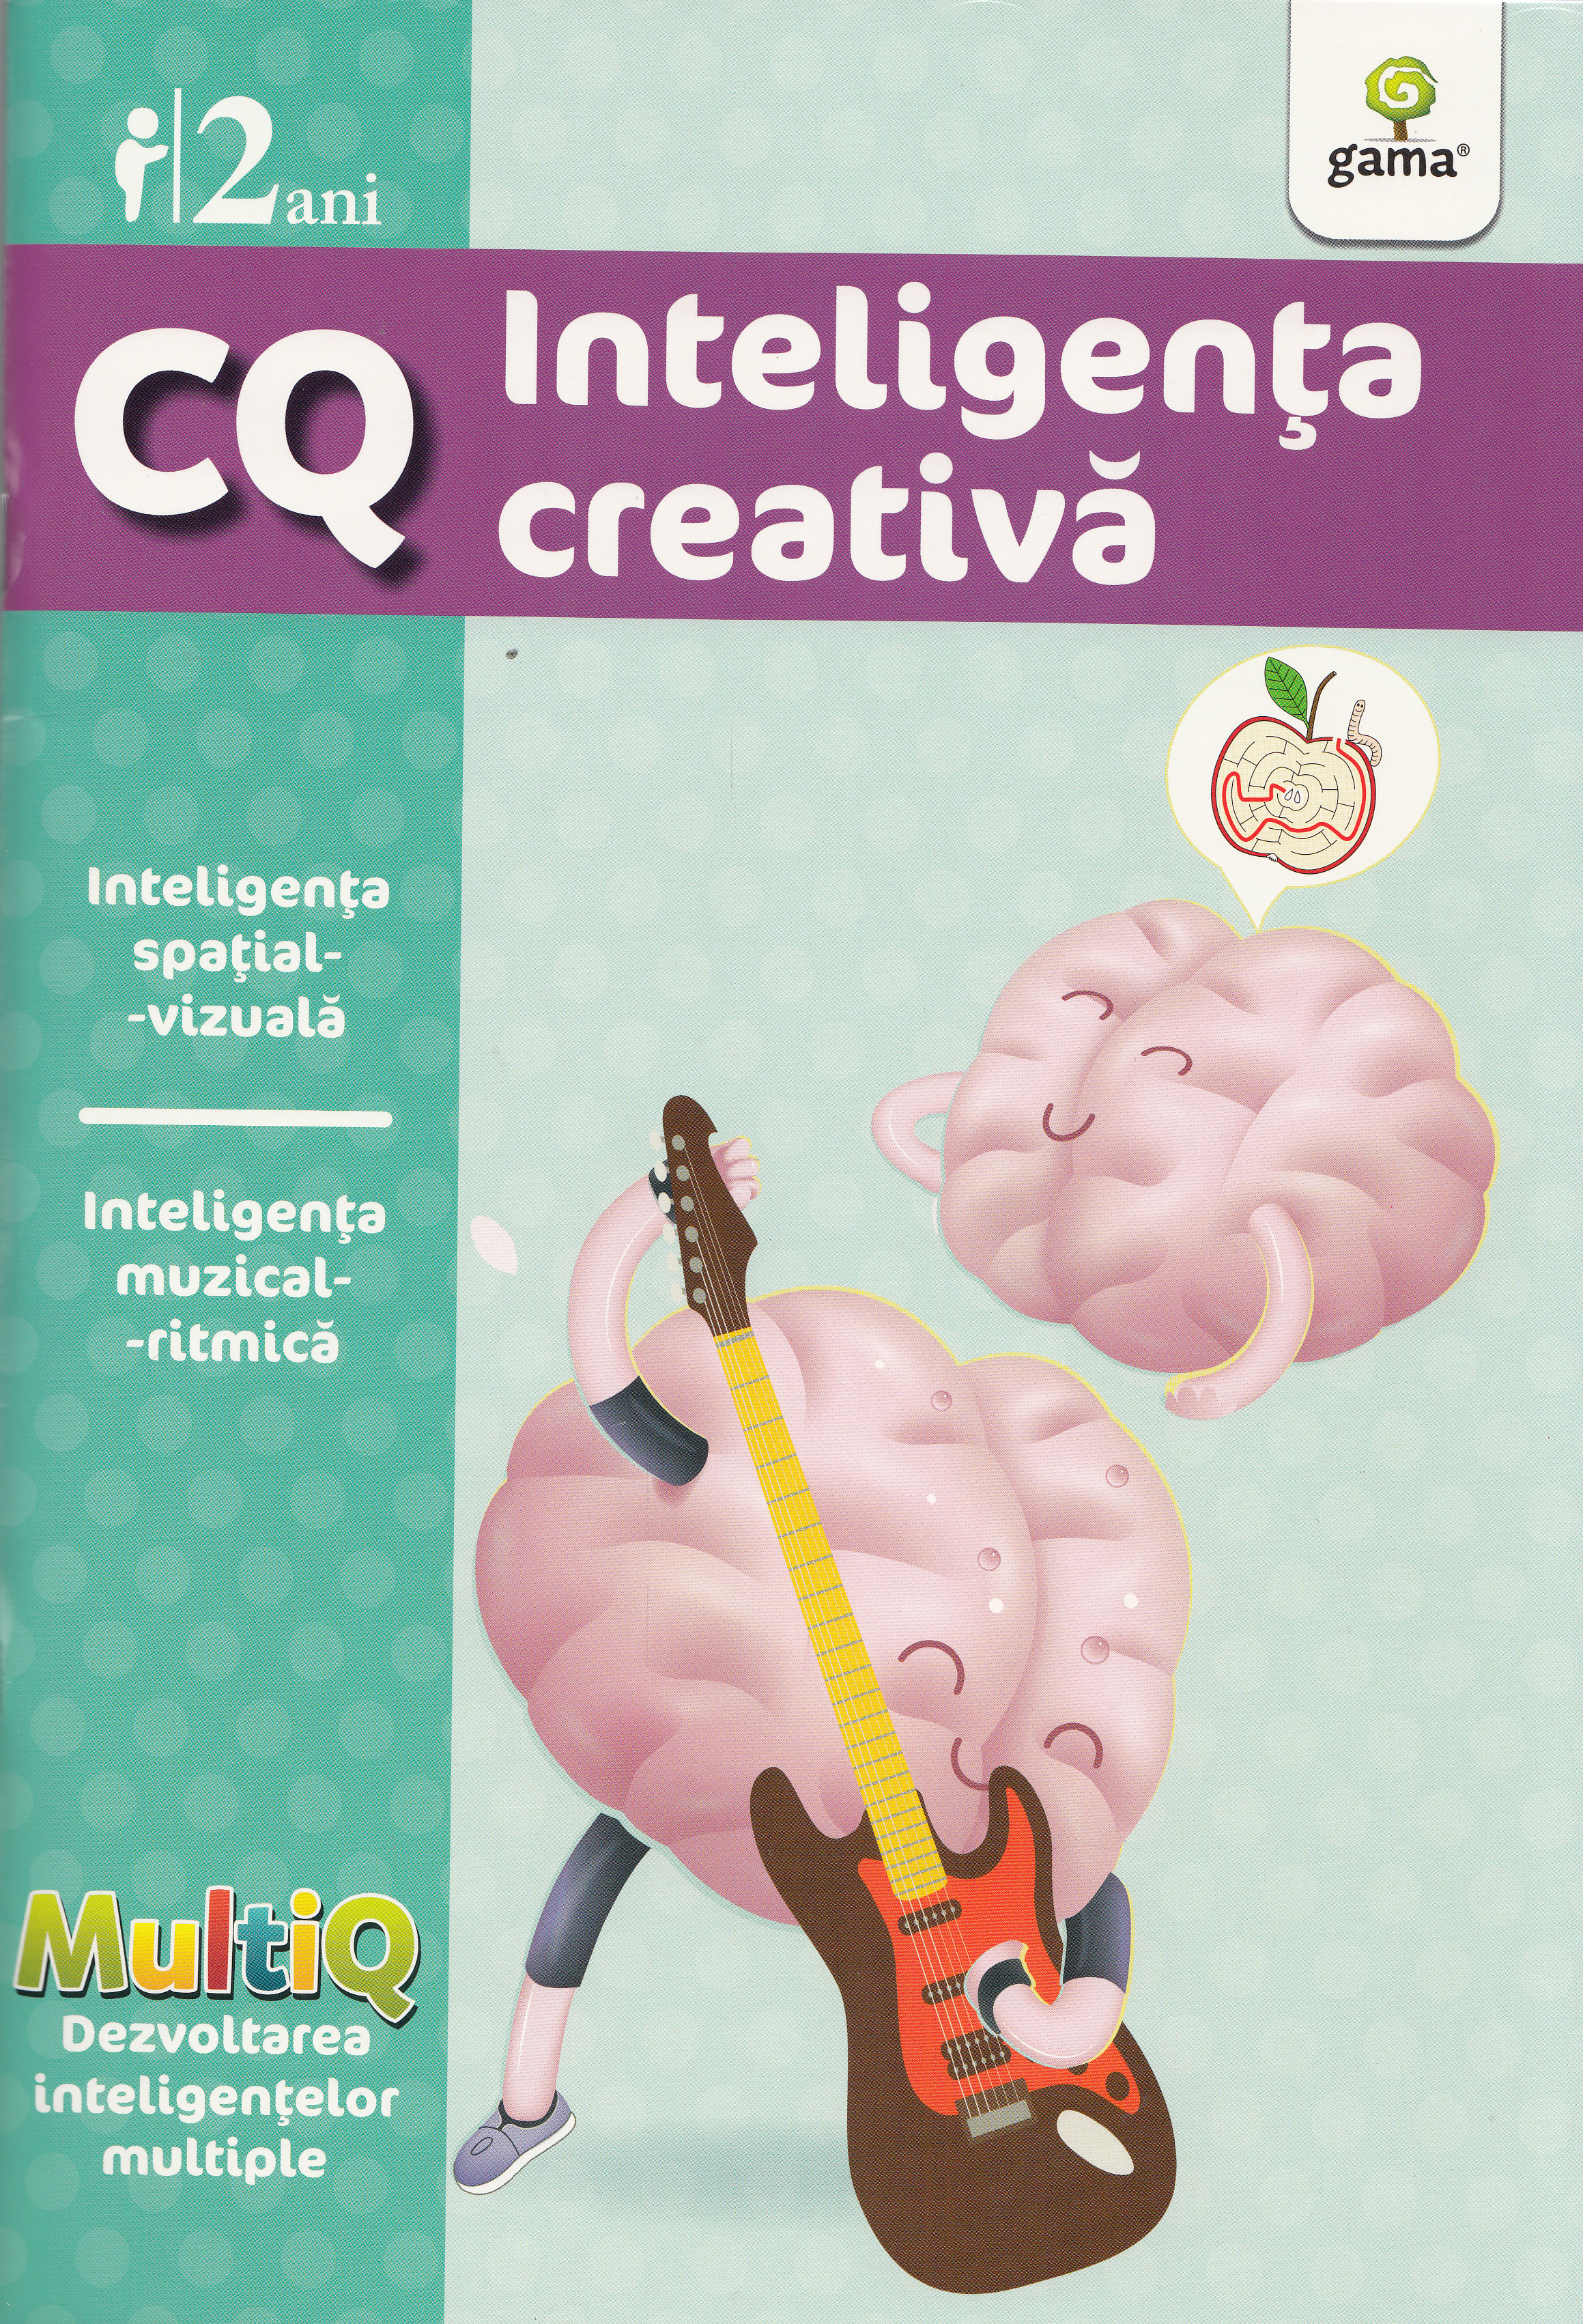 CQ 2 Ani Inteligenta creativa